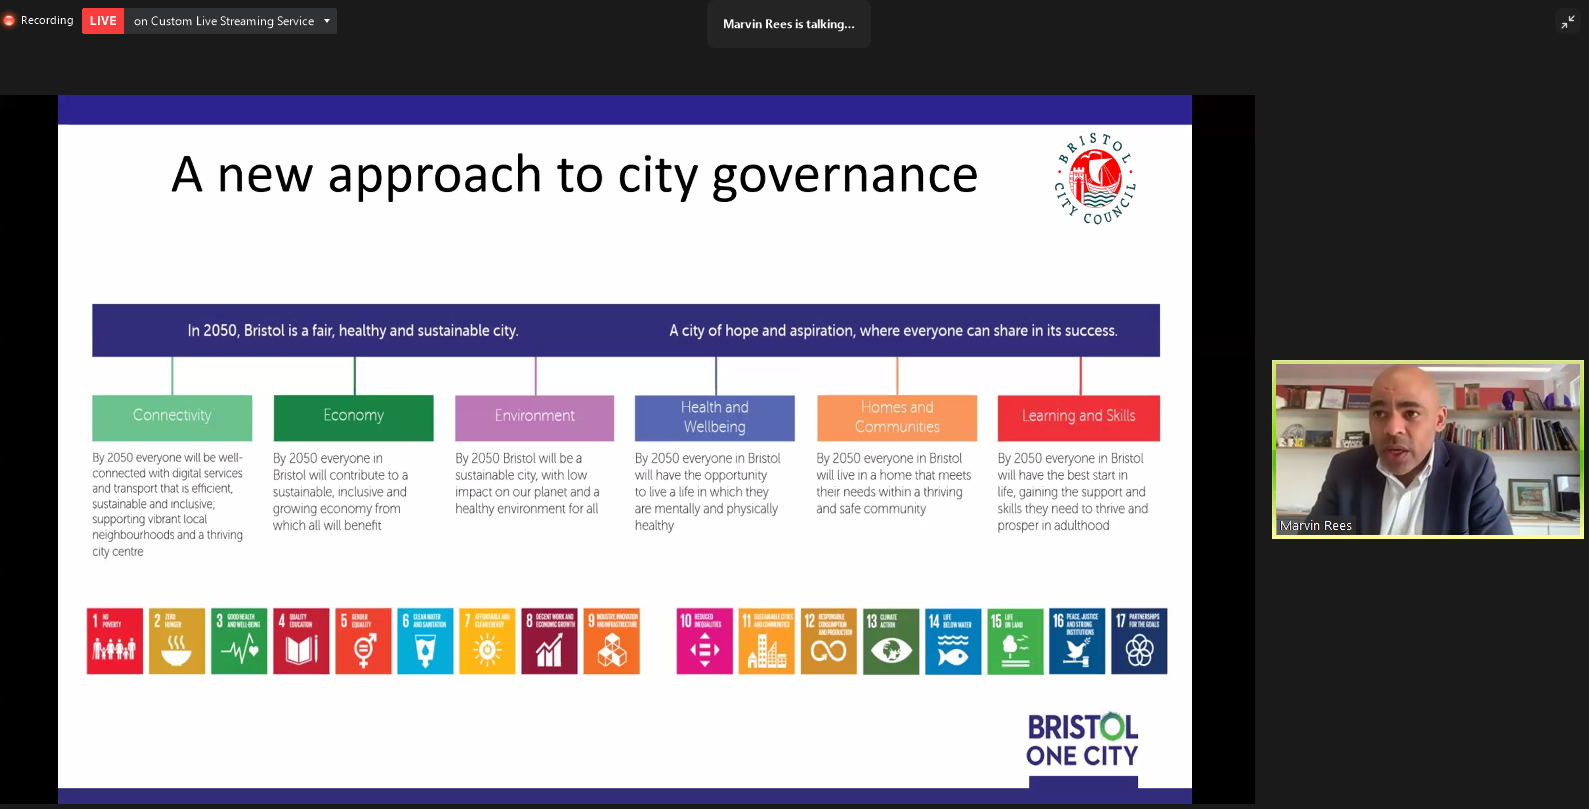 Presentation by Marvin Rees, Mayor of Bristol, United Kingdom